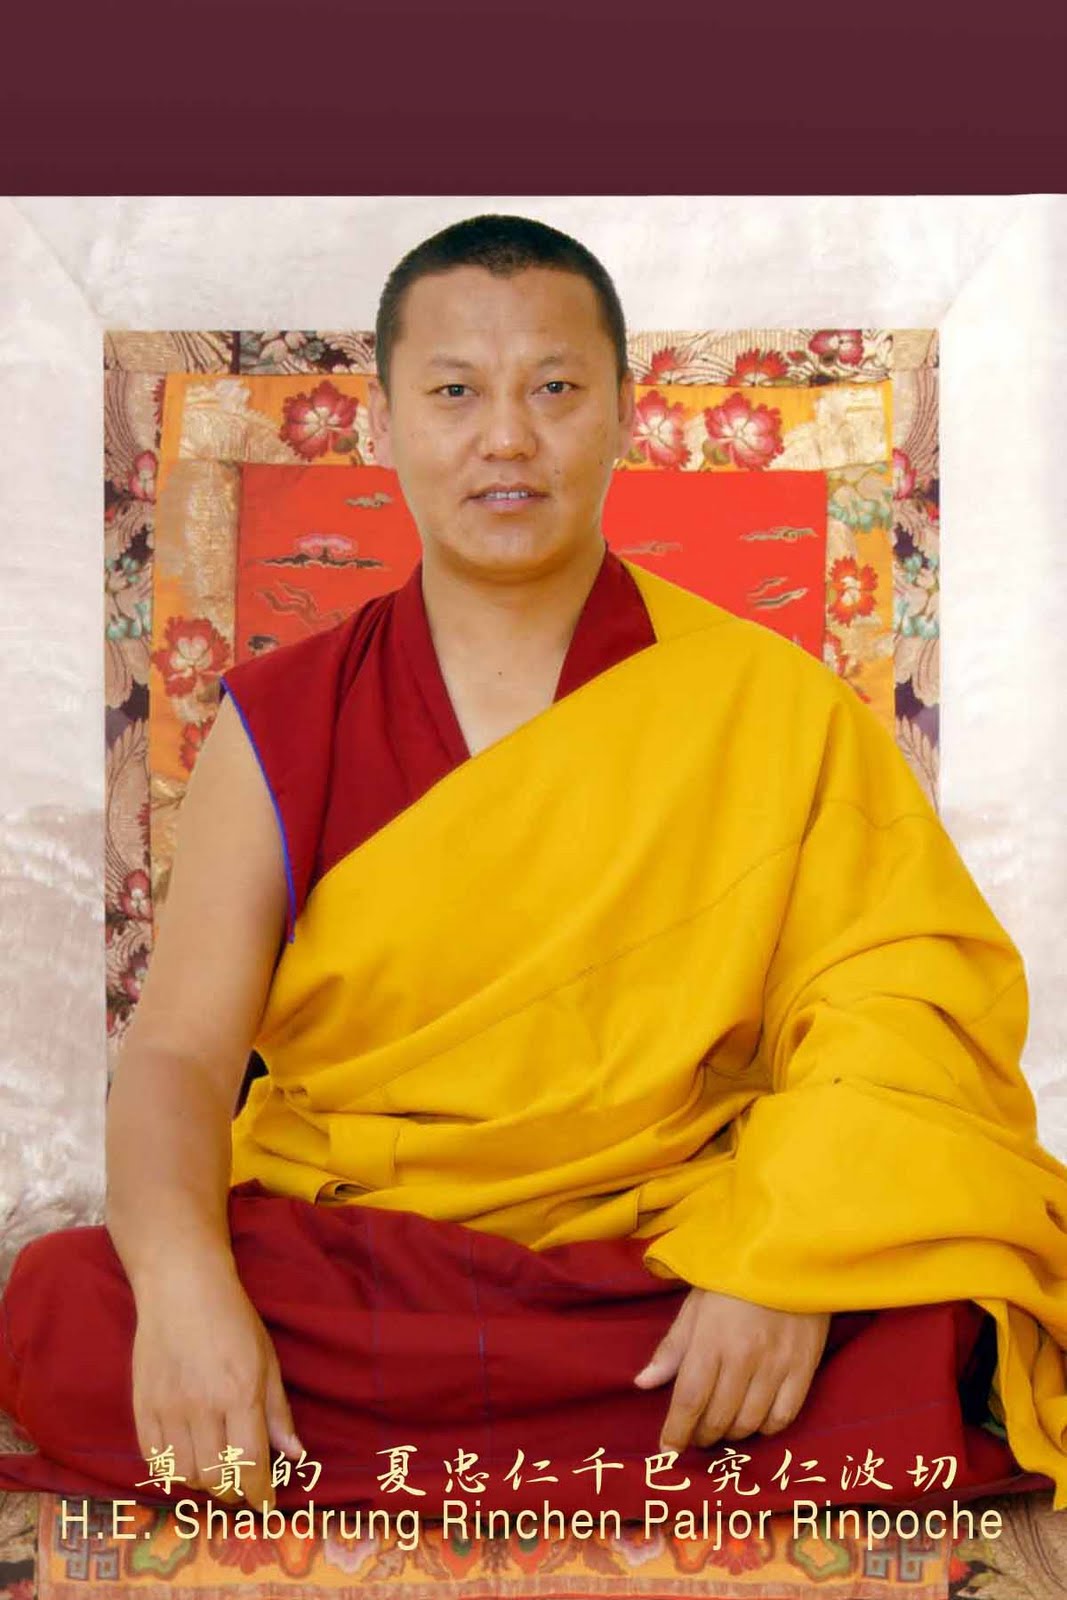 [Sabdung+RinpocheA-4r-100å¼µ.jpg]